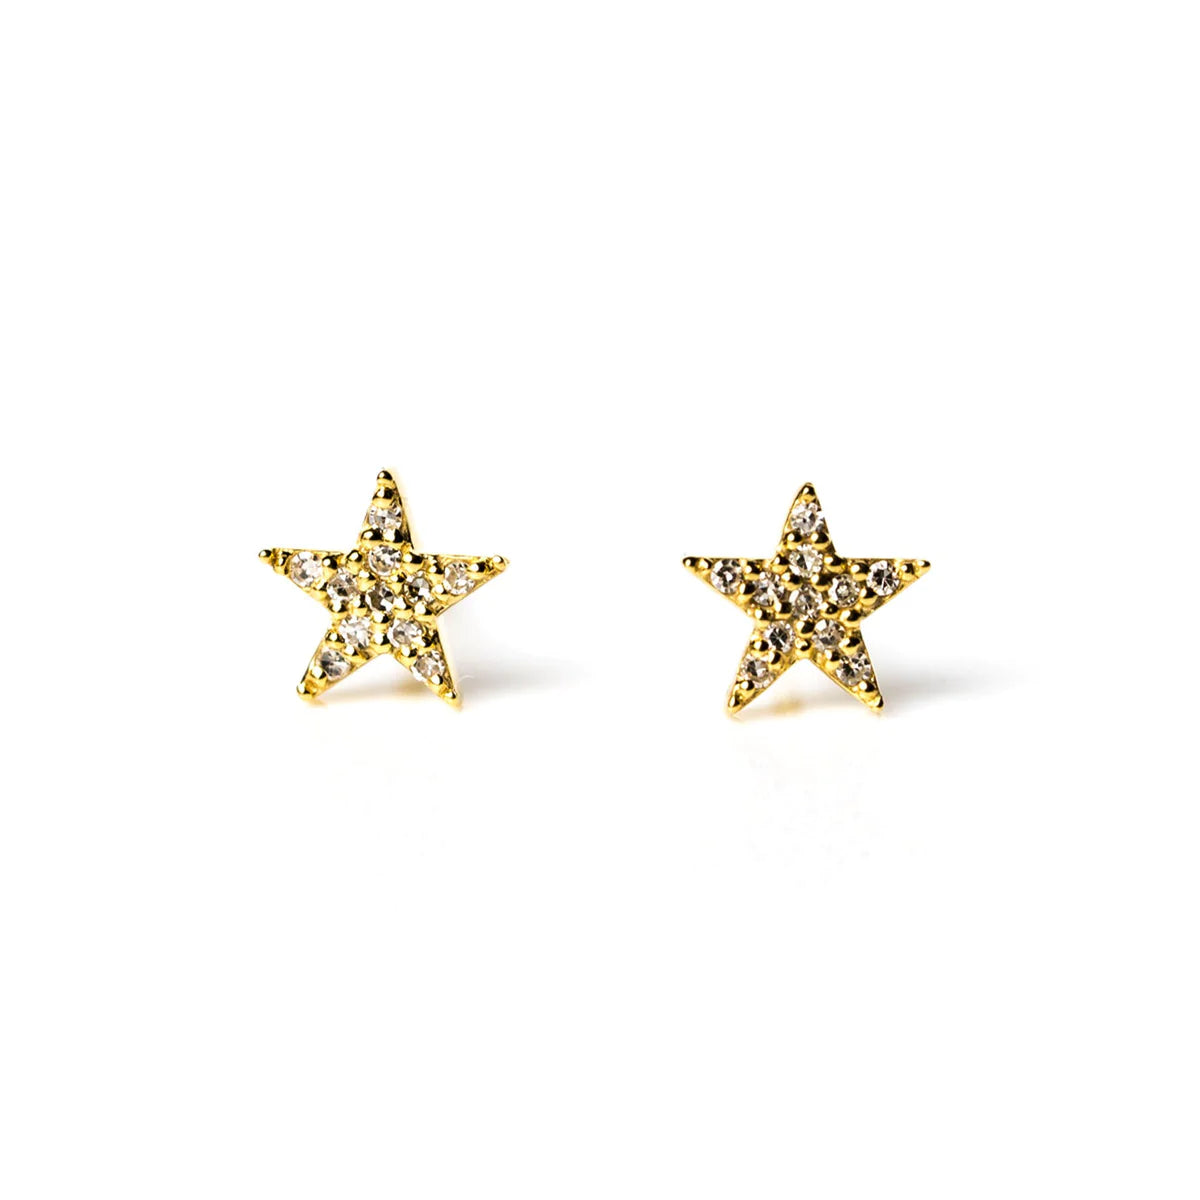 Pave diamond encrusted star studded earrings